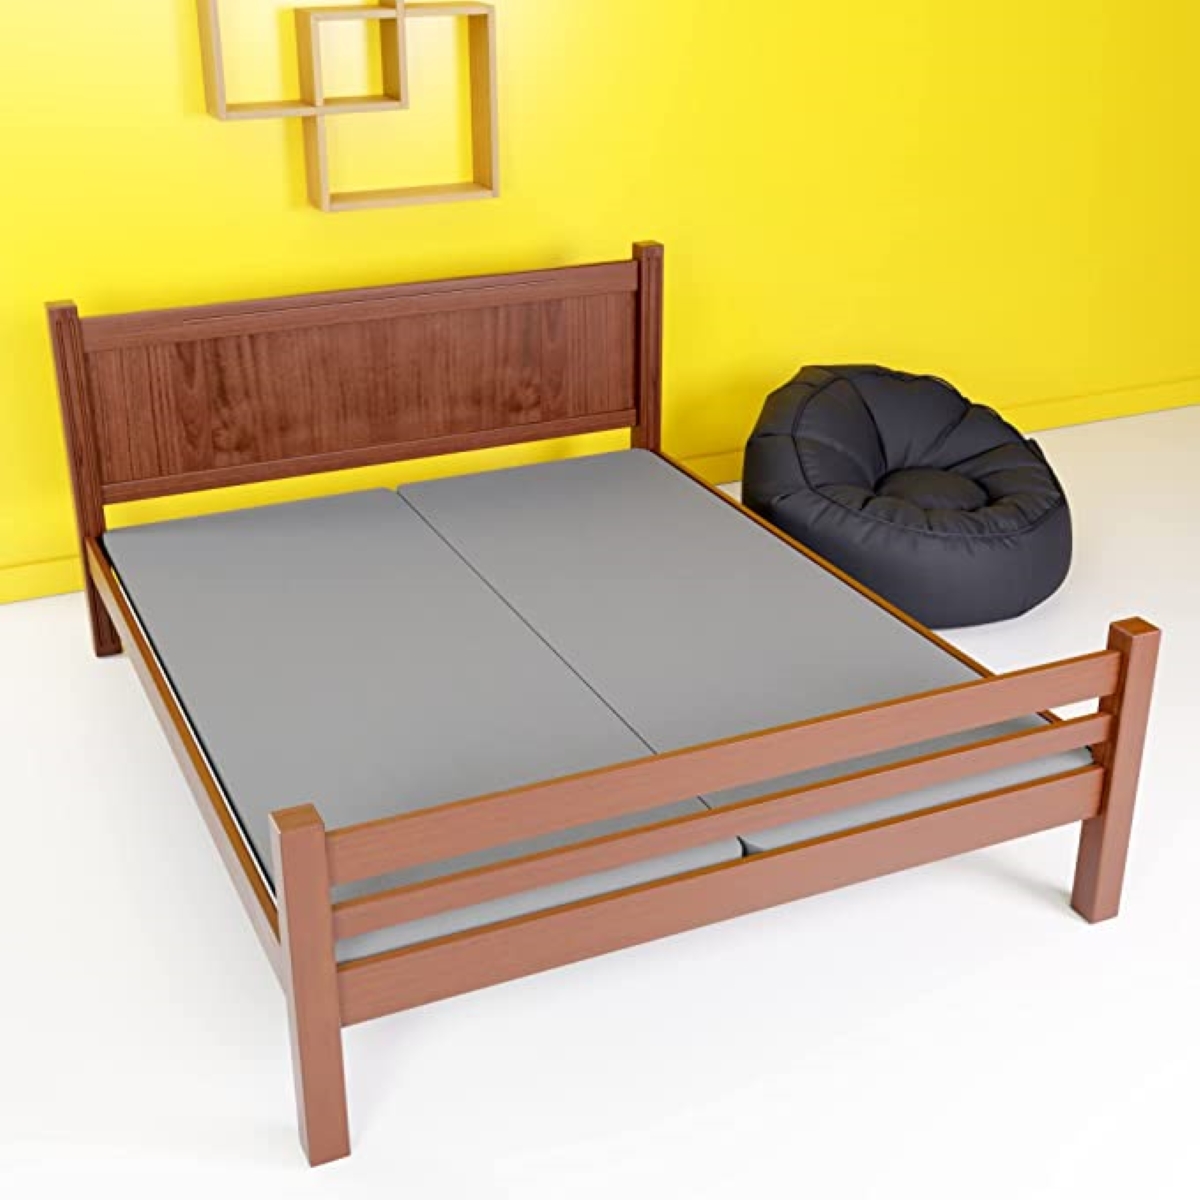 box spring alternatives - bunkie board mattress